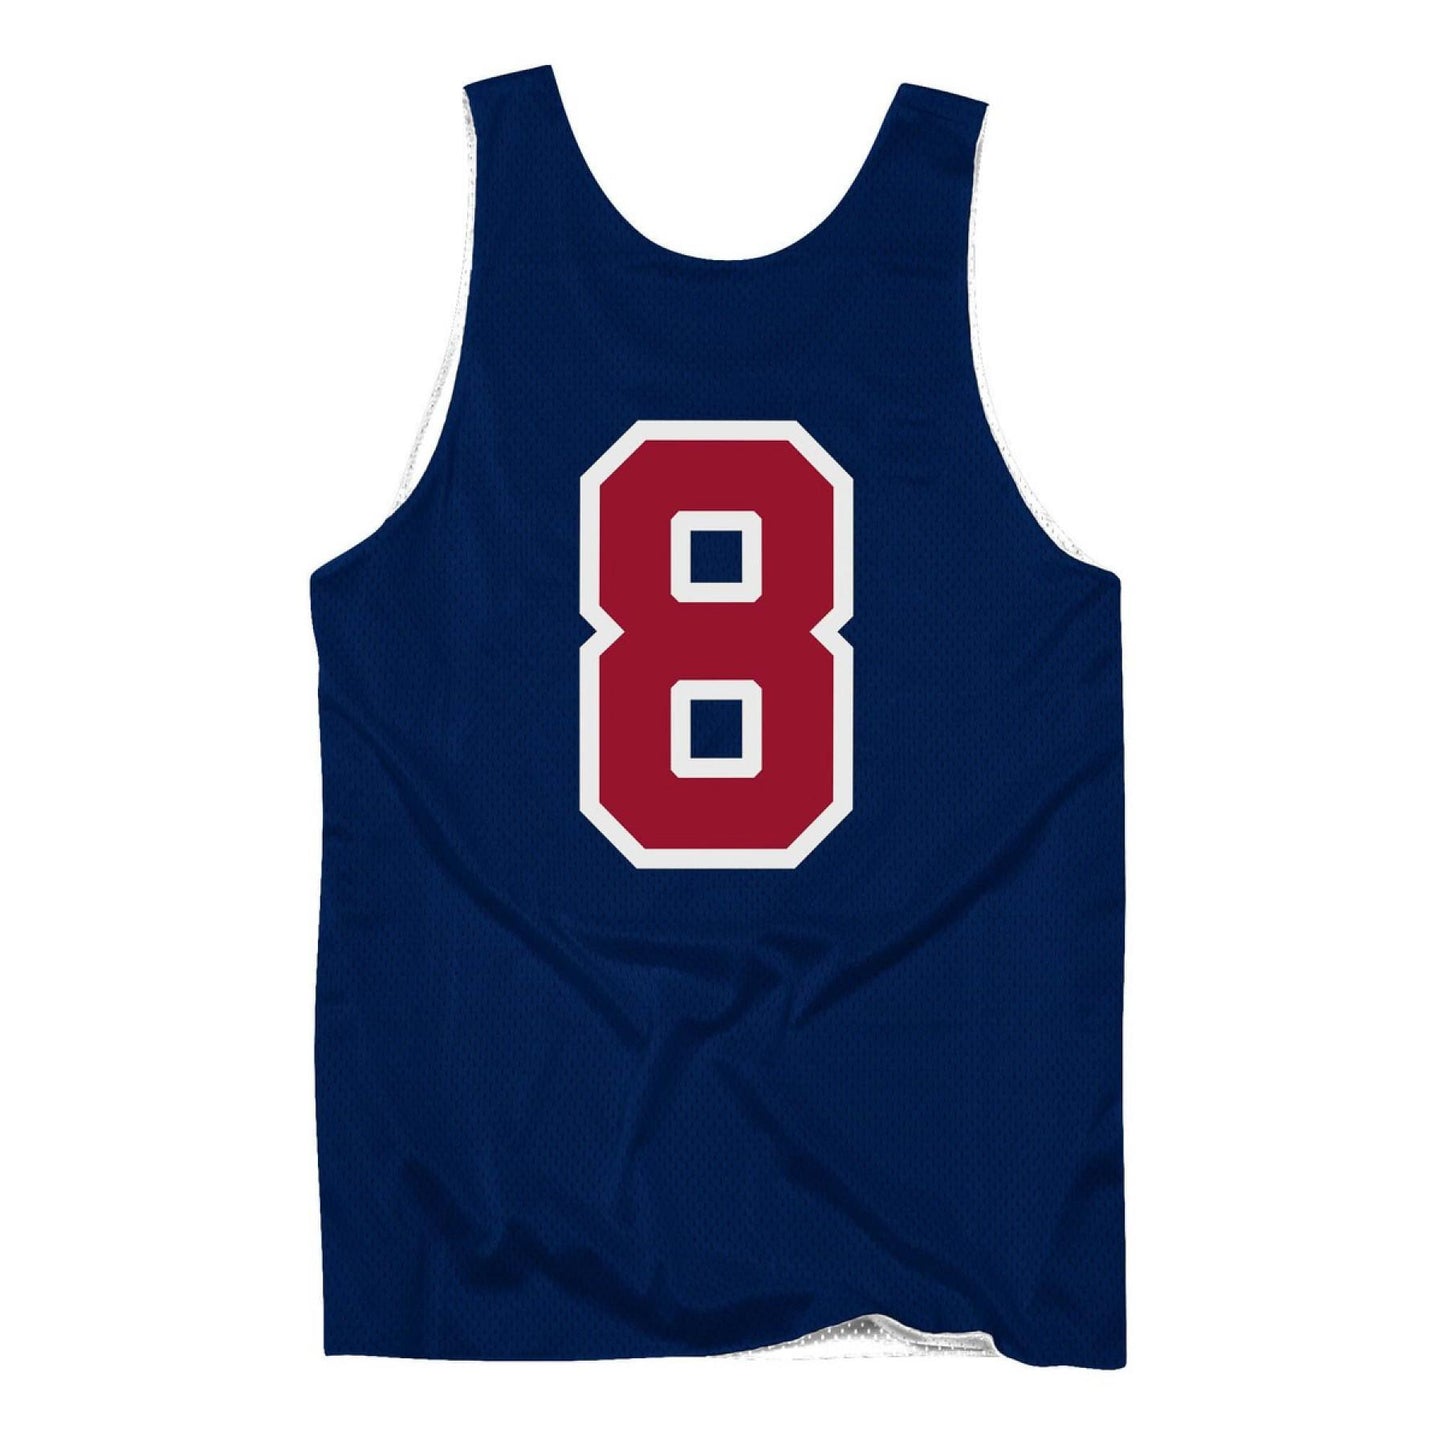 NBA Authentic Reversible Practice Jersey Team USA 1992 Scottie Pippen